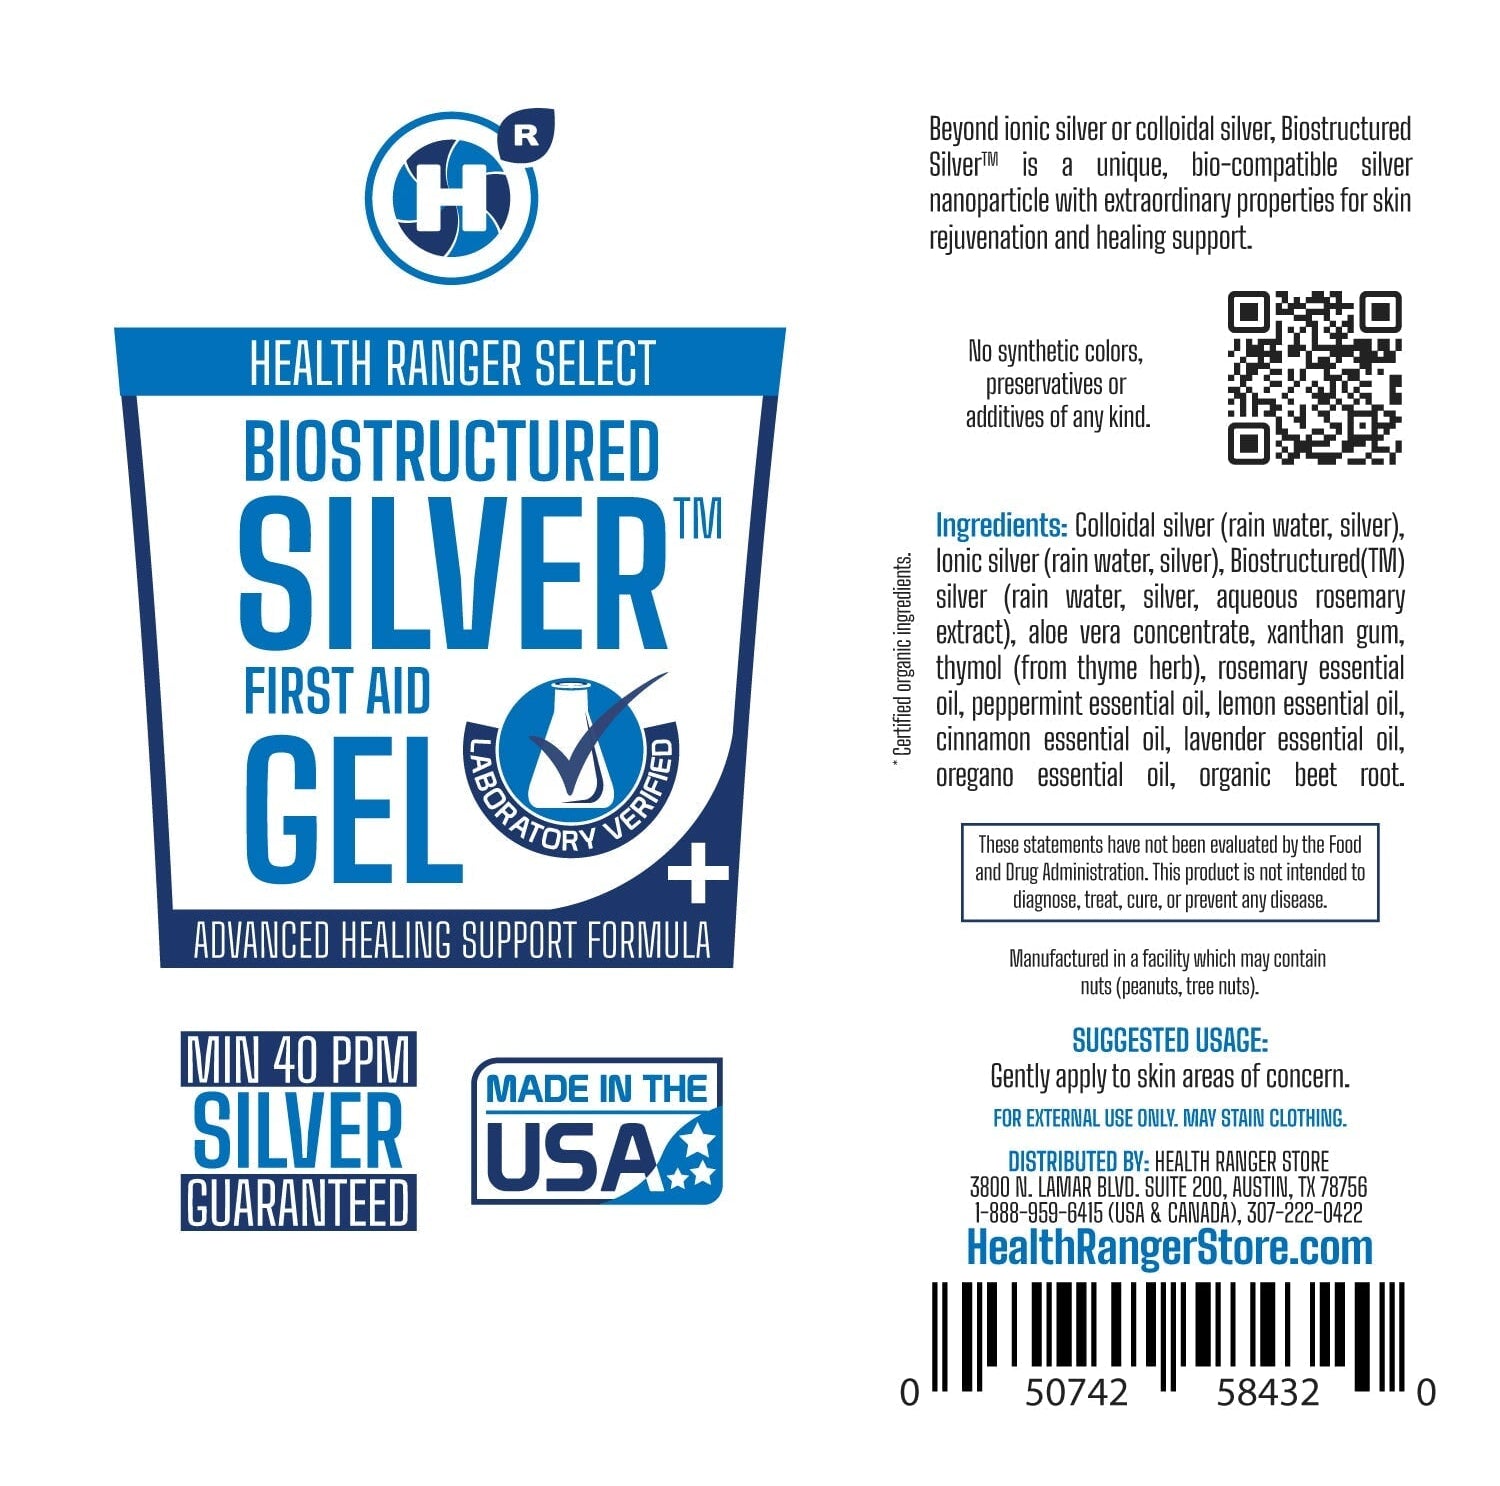 Biostructured Silver™ First Aid Gel Tube 3.38 fl. oz (100 ml) Personal Care Brighteon Store 